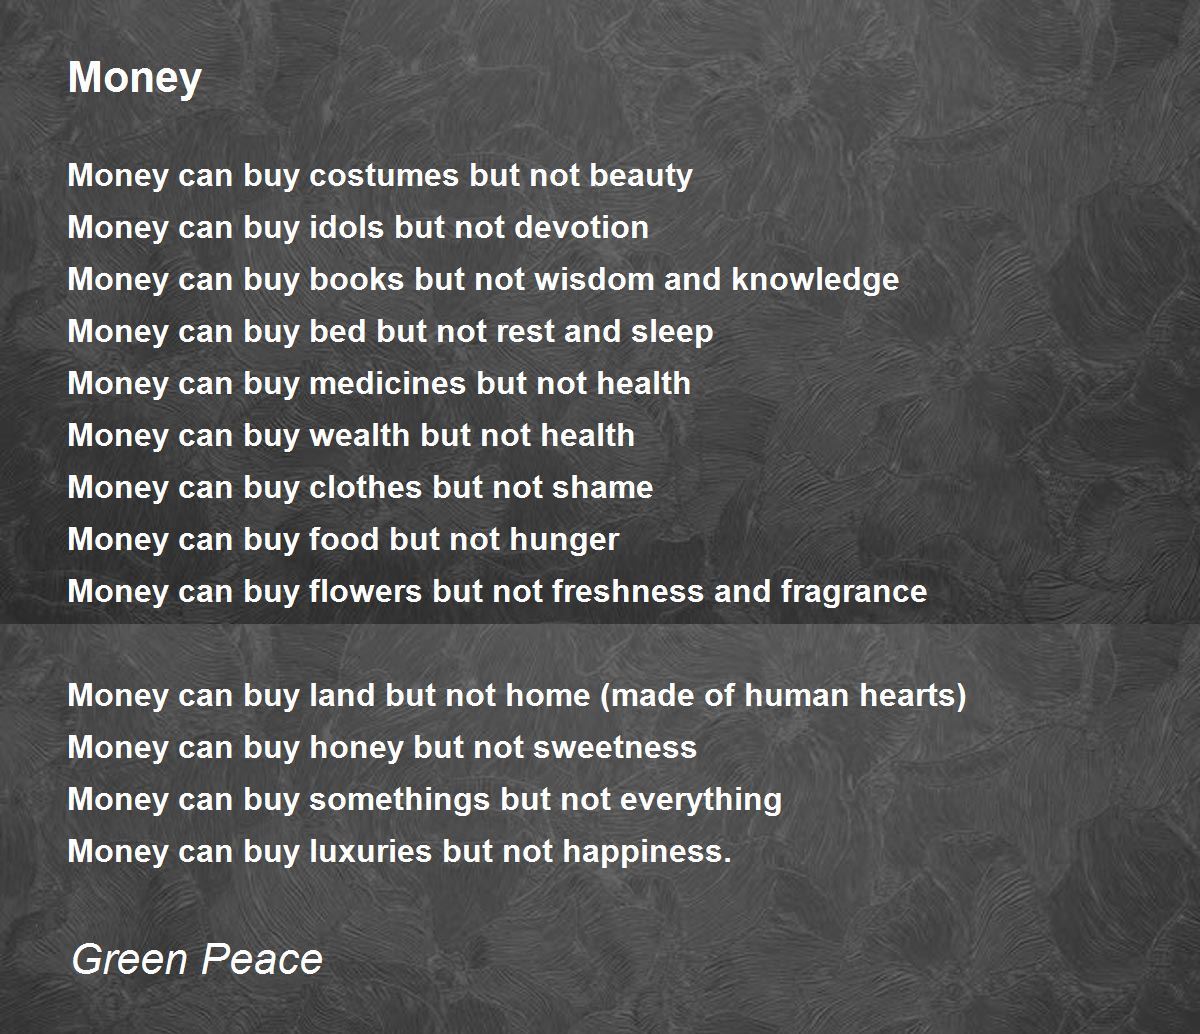 Money buy love essay